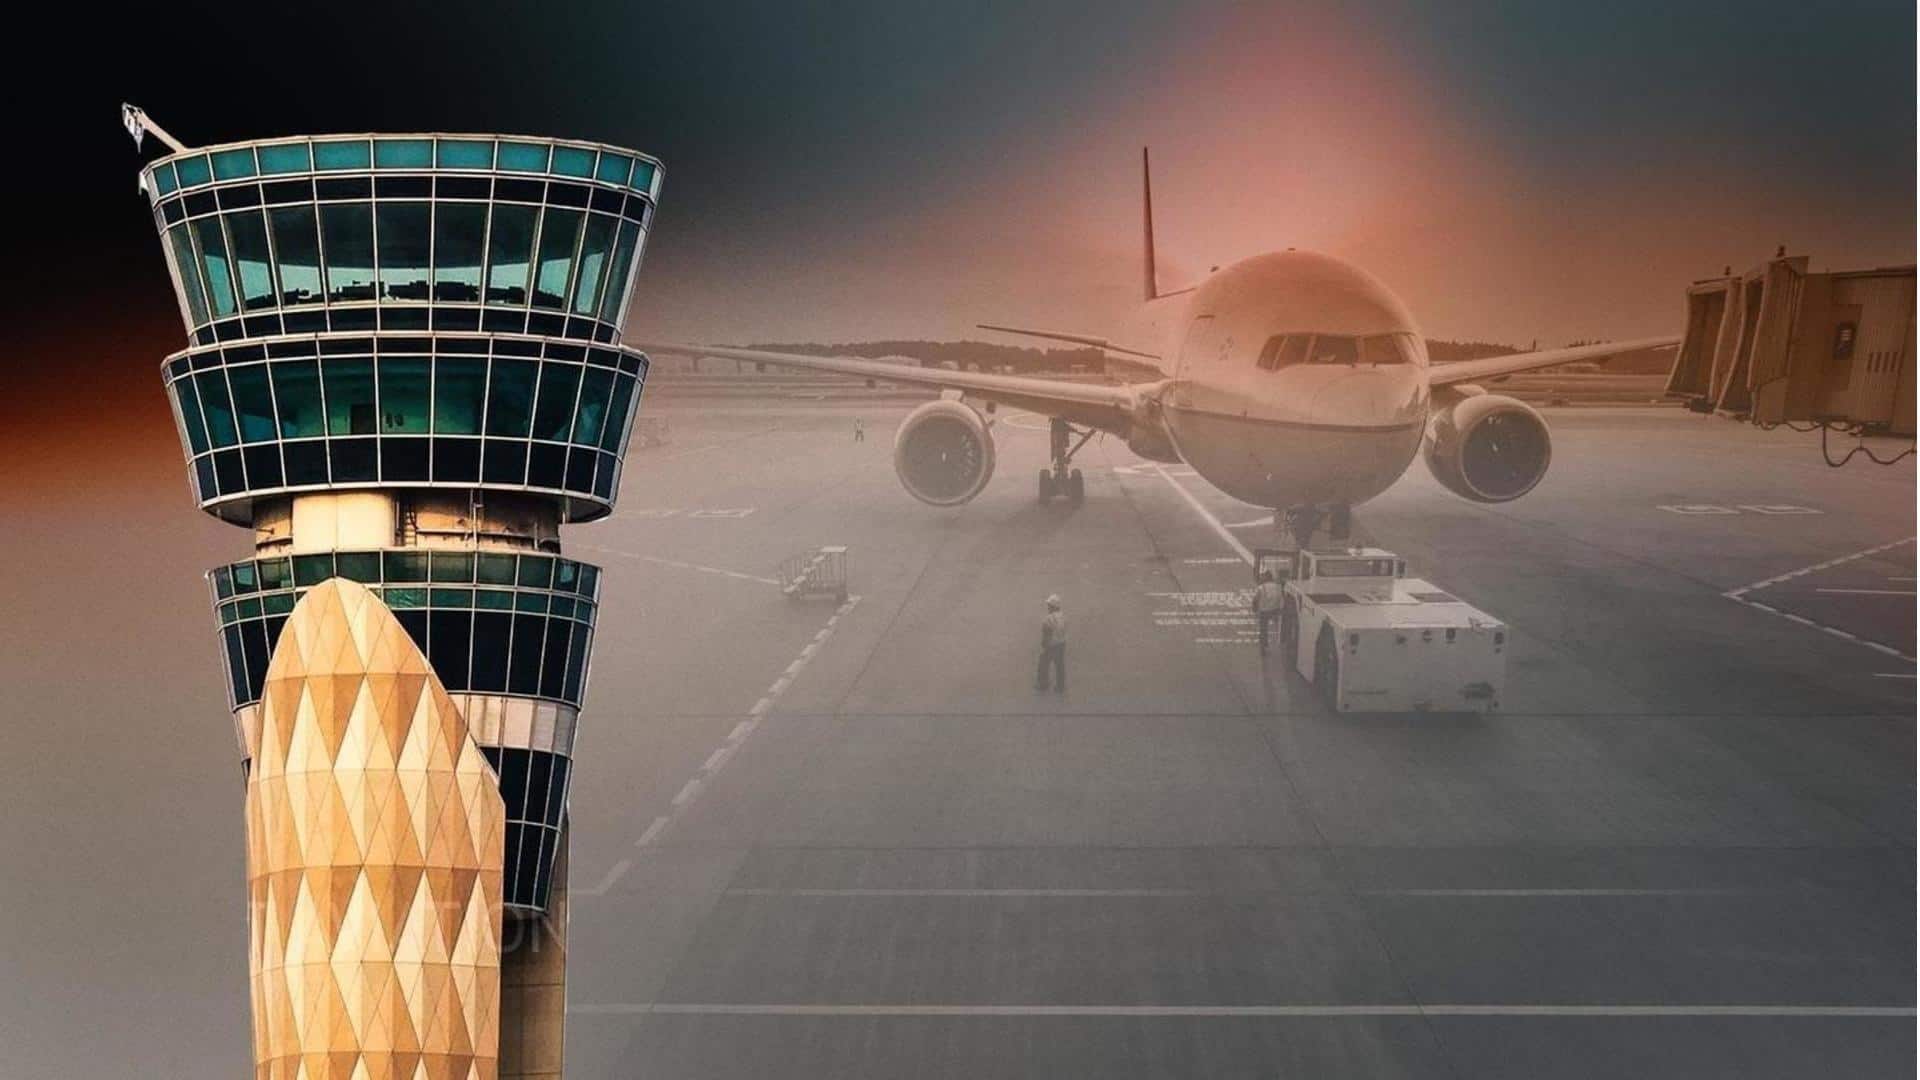 Delhi: 18 flights diverted due to smog, bad weather